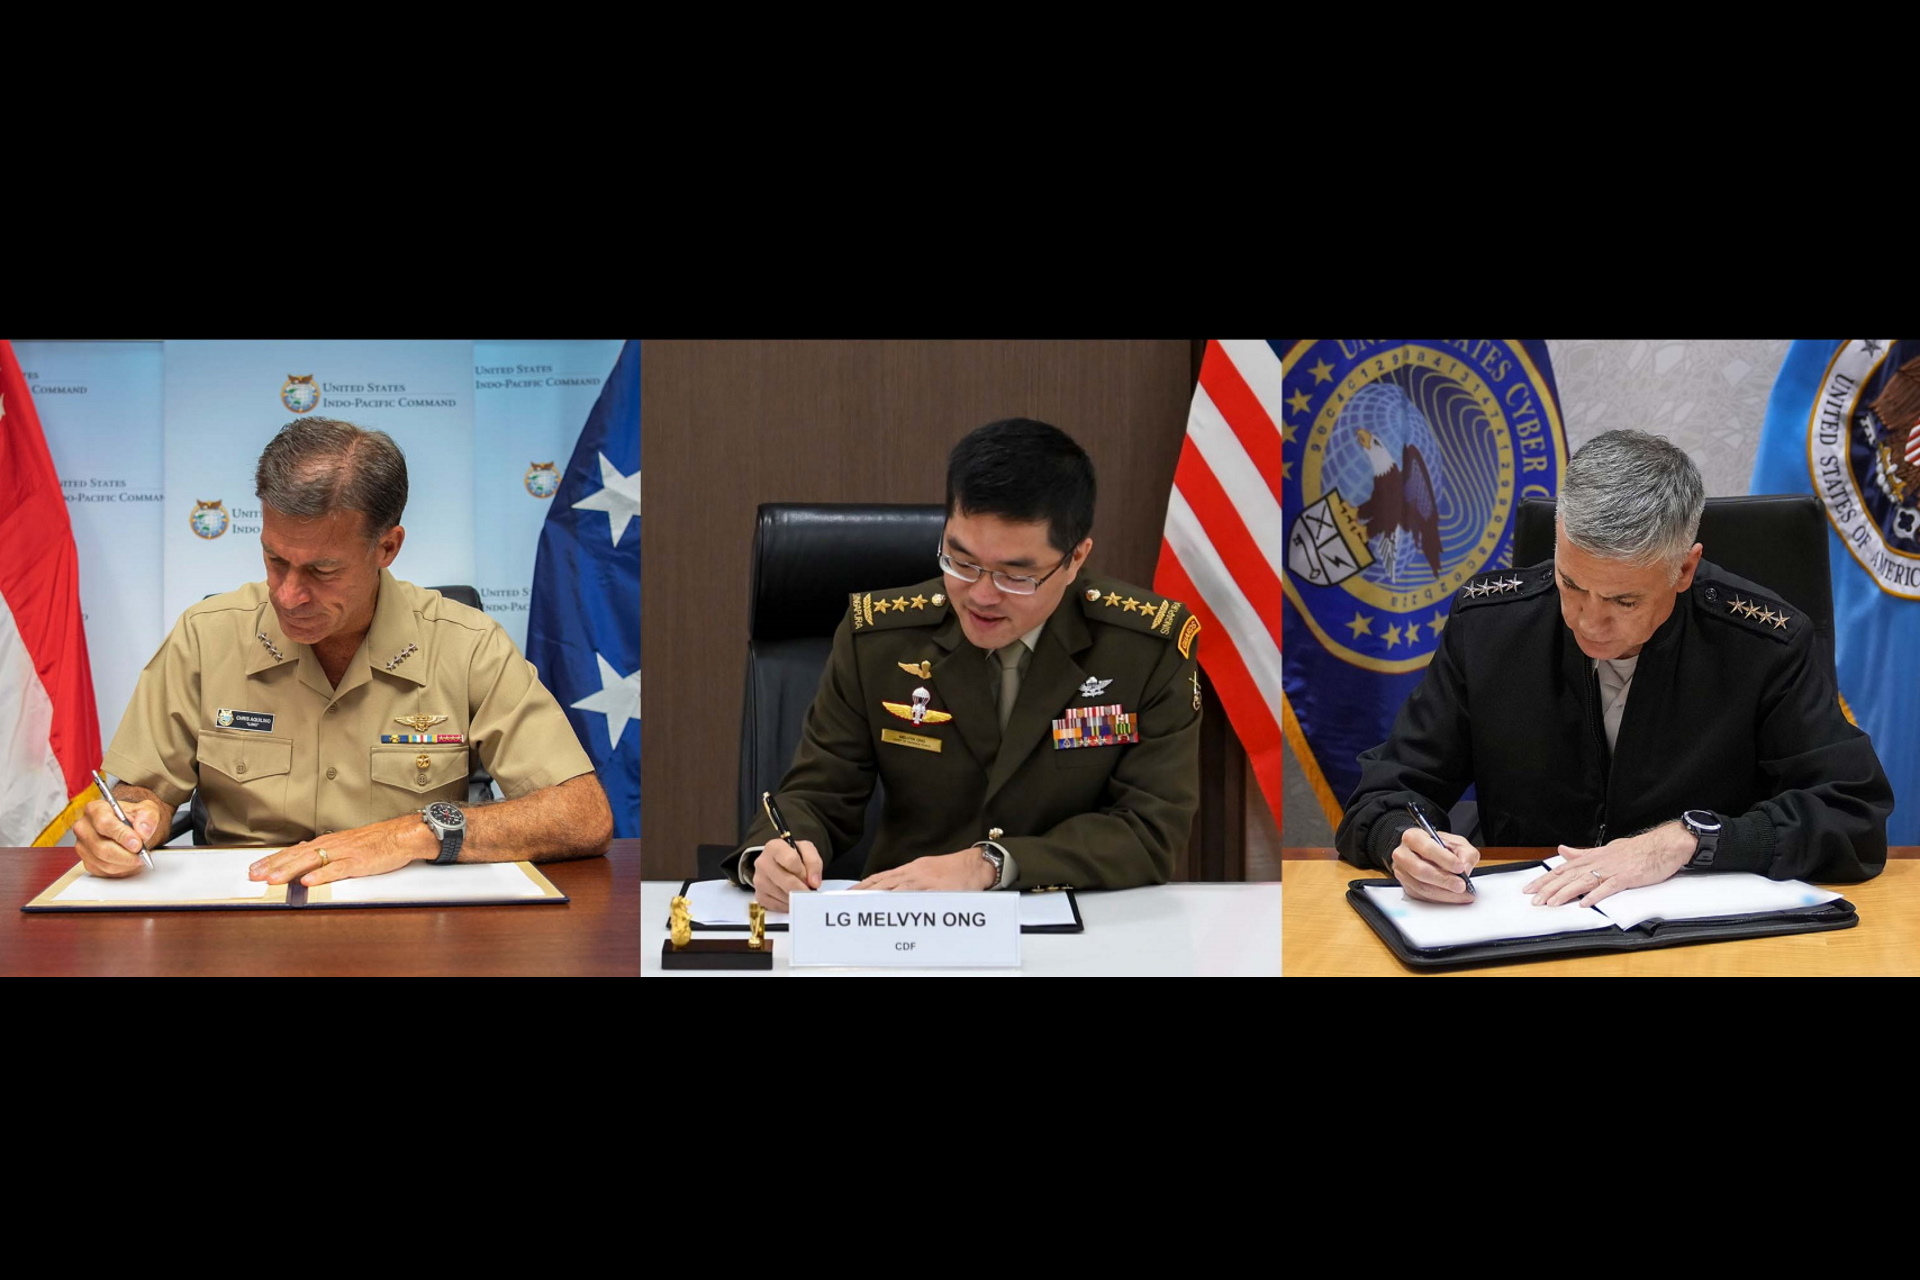 Signing of the Memorandum of Understanding concerning cooperation in cyberspace.